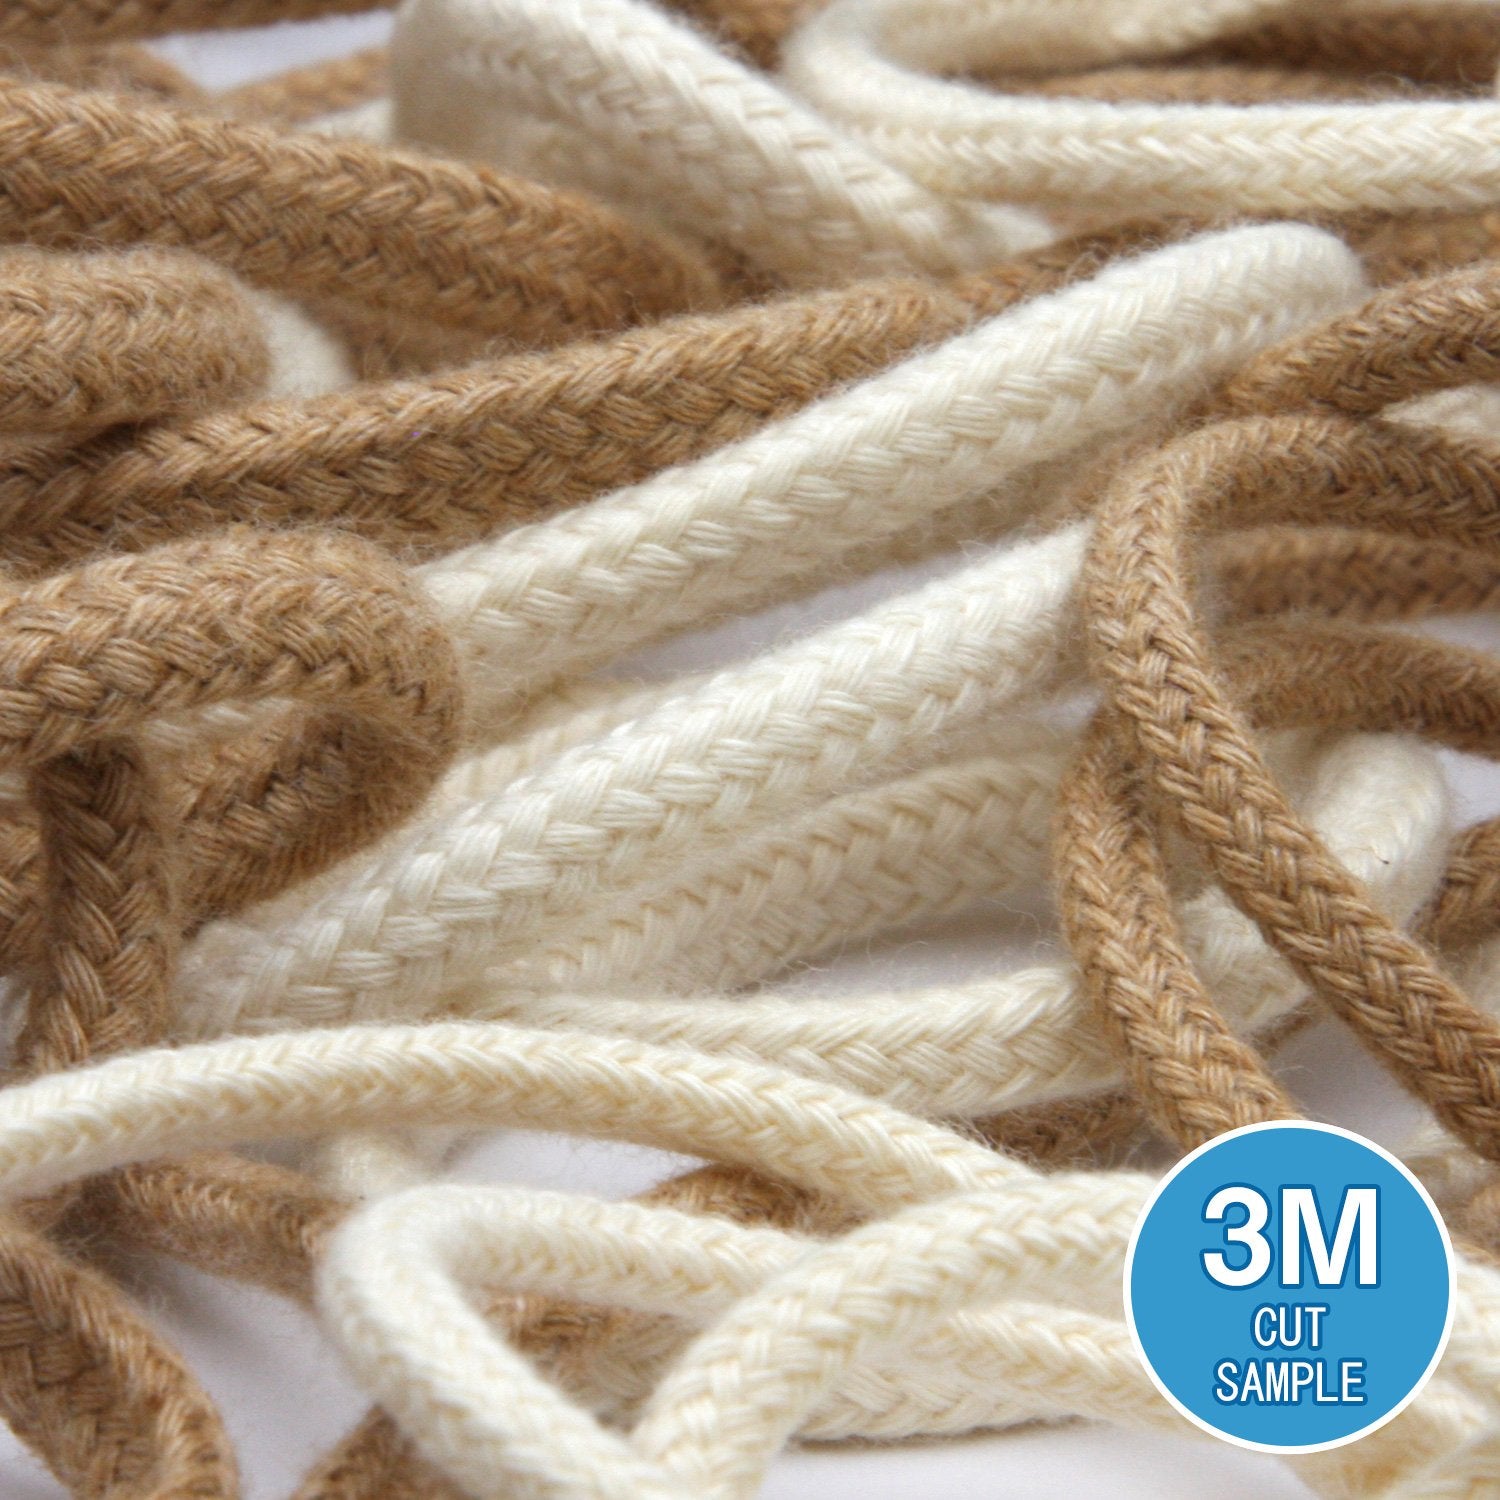 FUJIYAMA RIBBON [Sample] Organic Cotton Spindle Cord (FY-19202) approx.3mm 3 Meters Cut